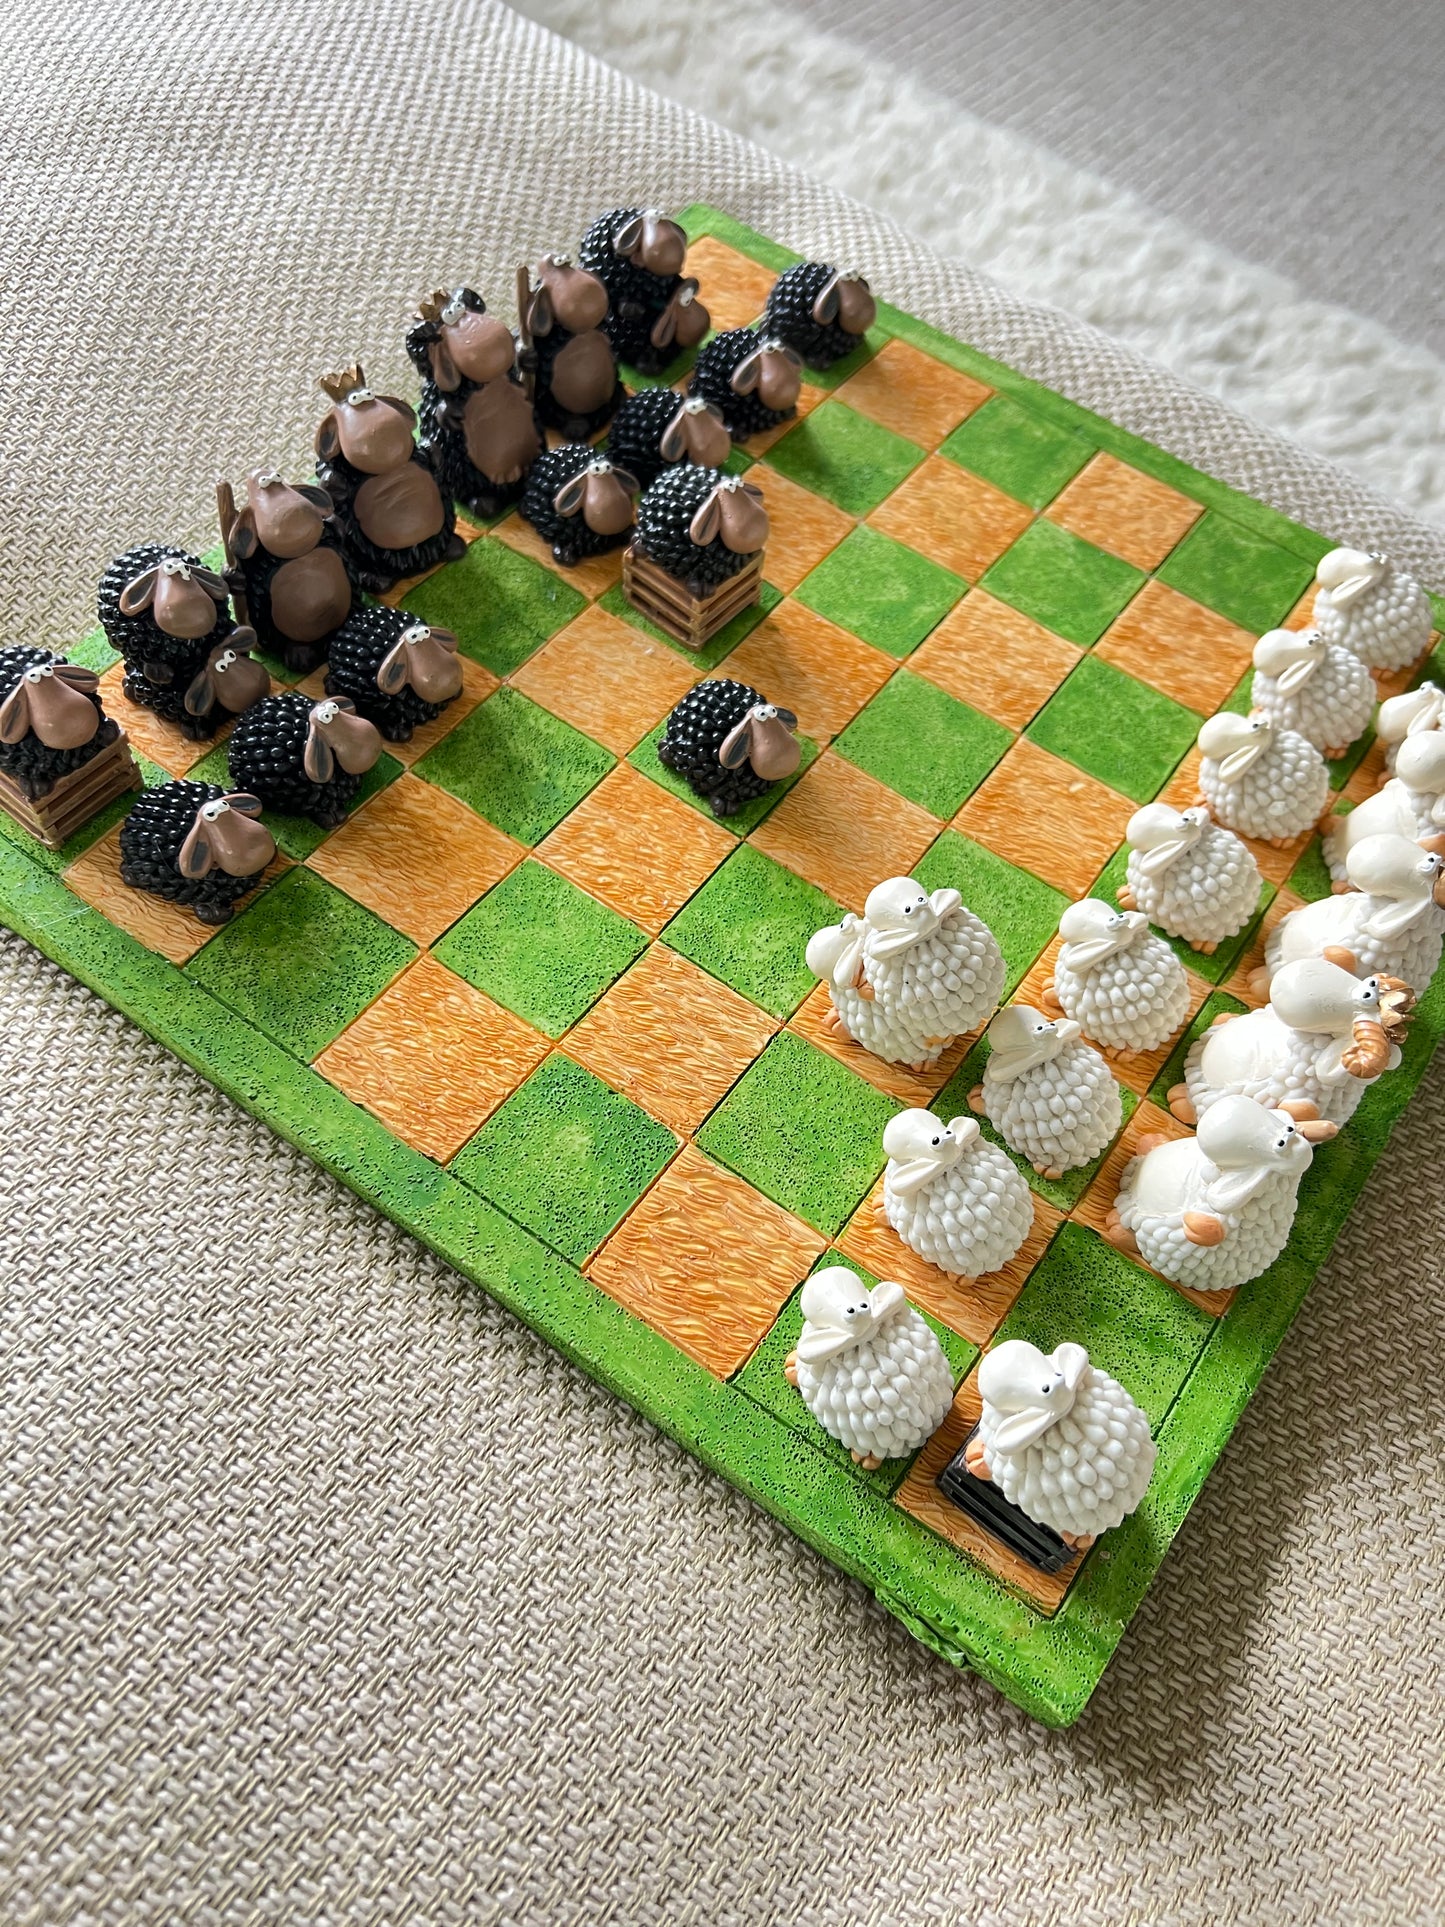 Sheep vs Sheep Chess Set